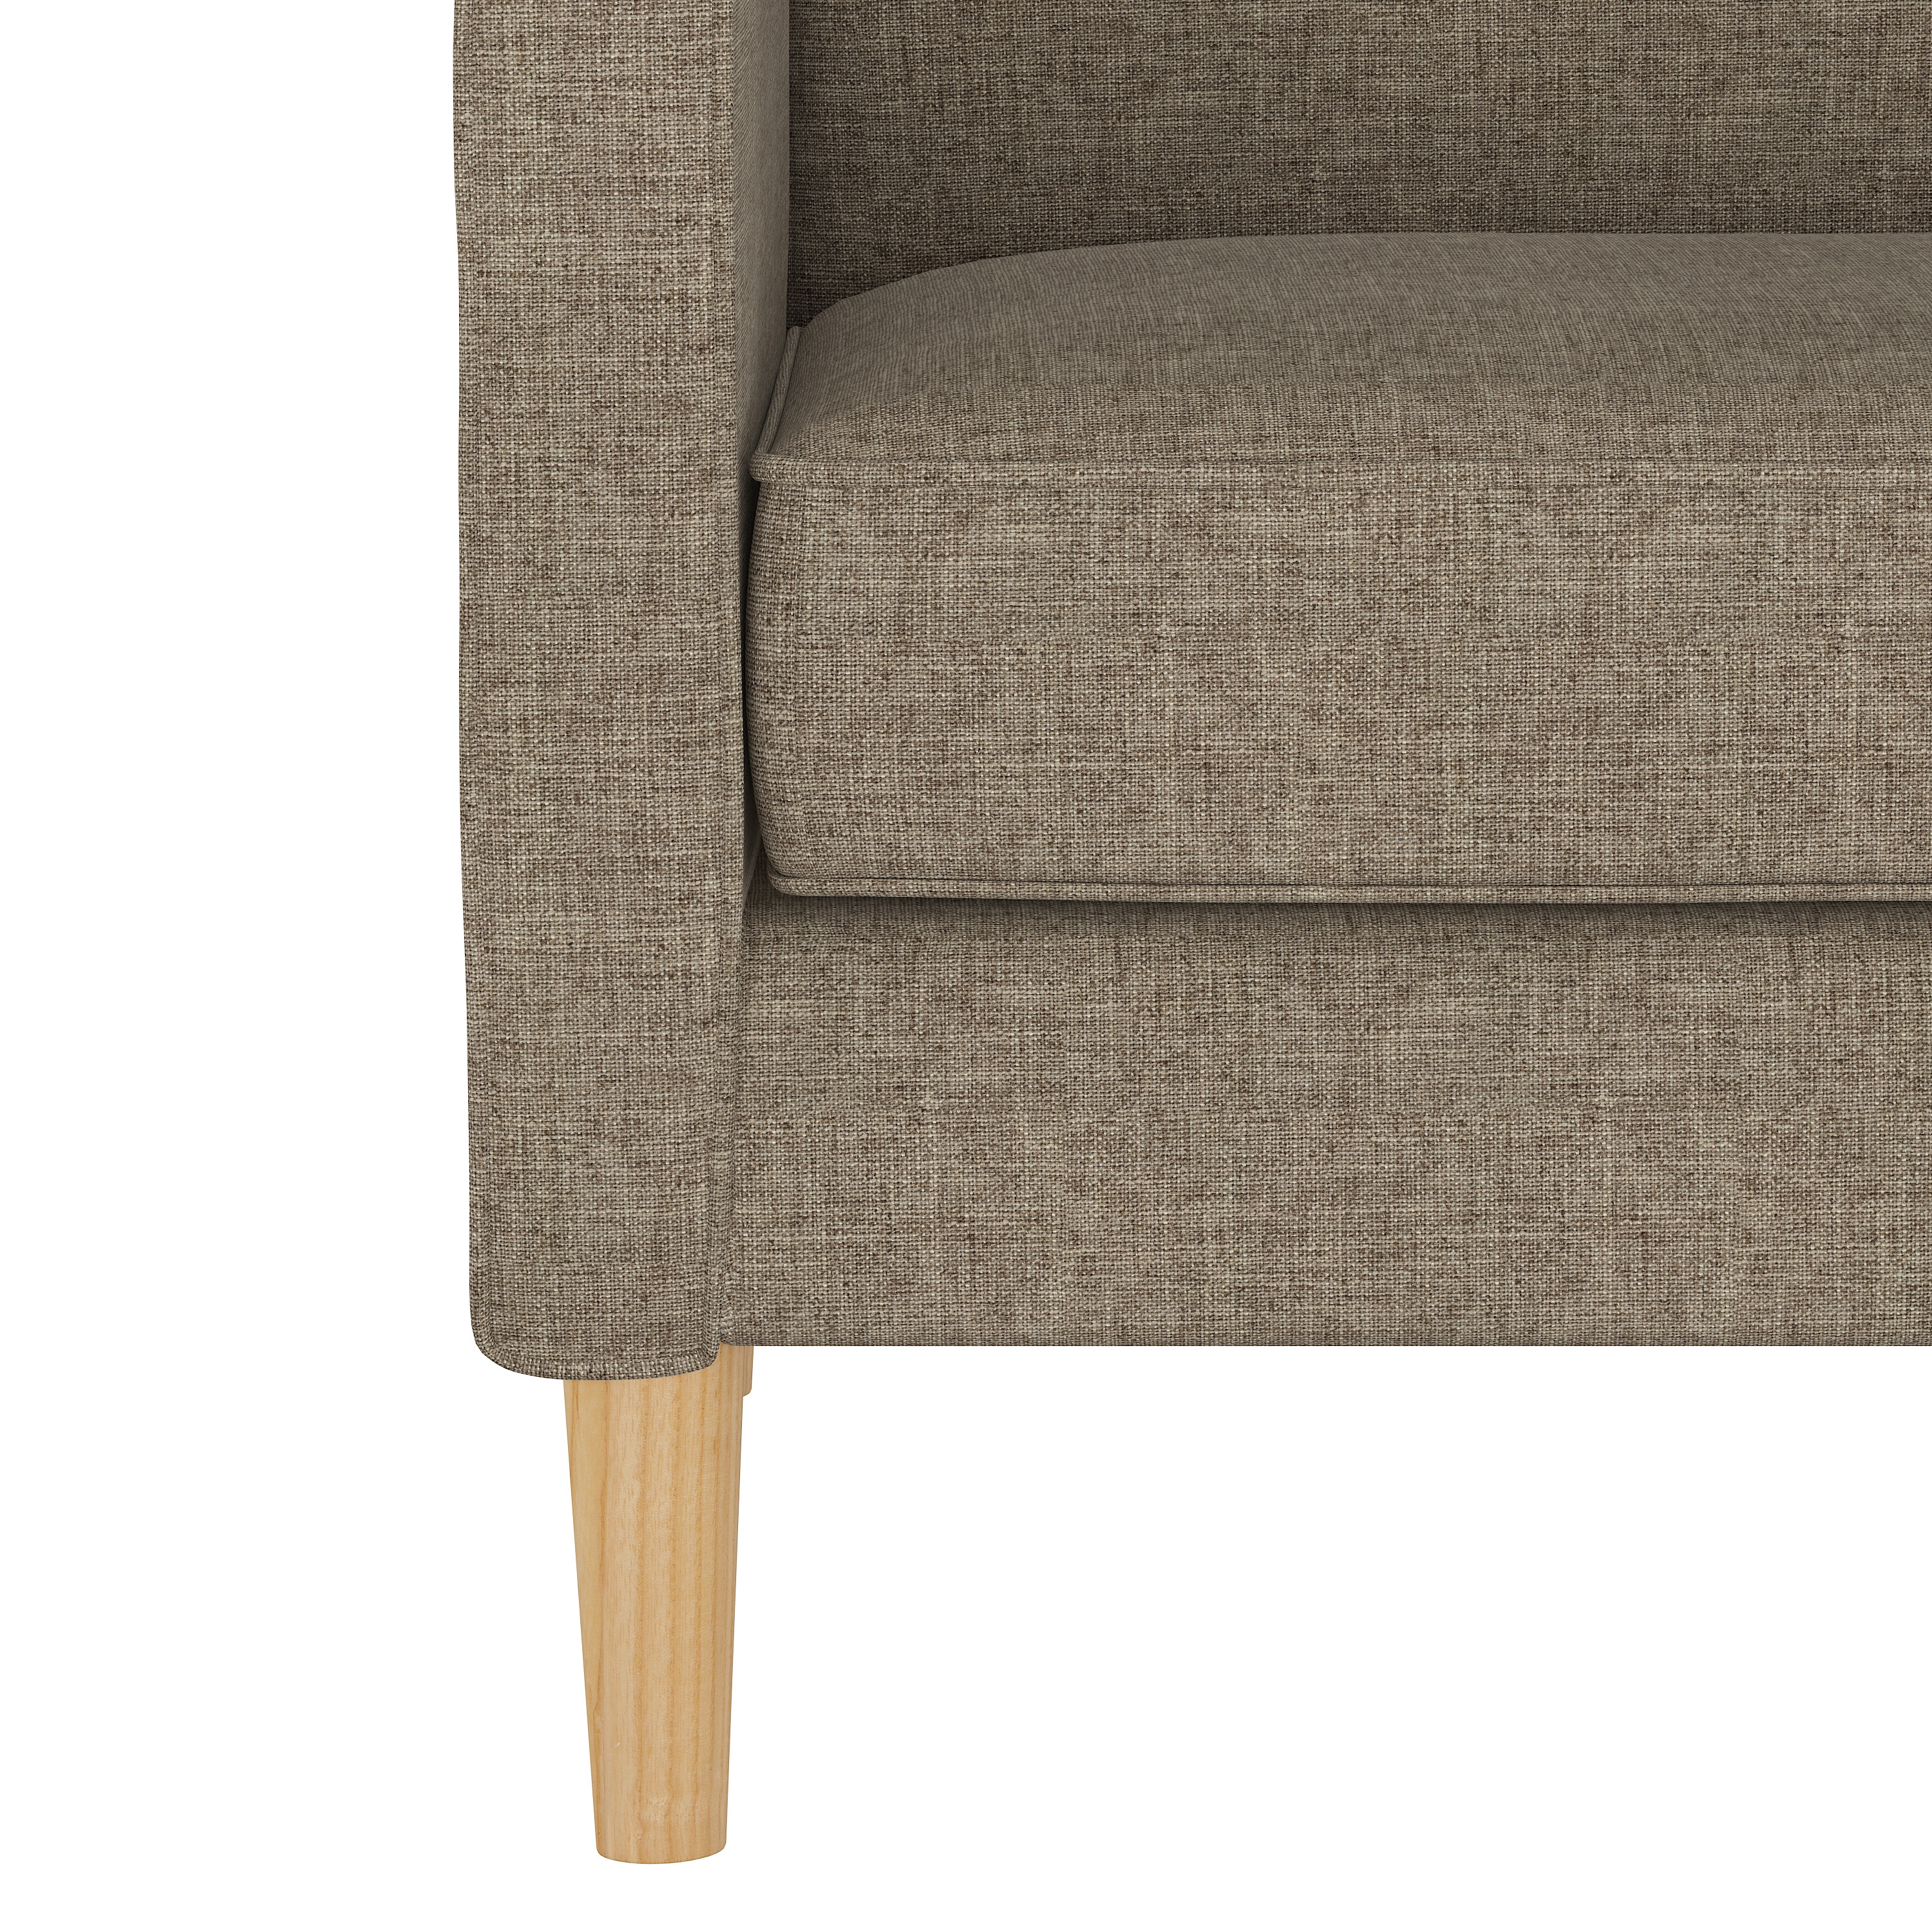 Humboldt Chair, Linen - Image 4